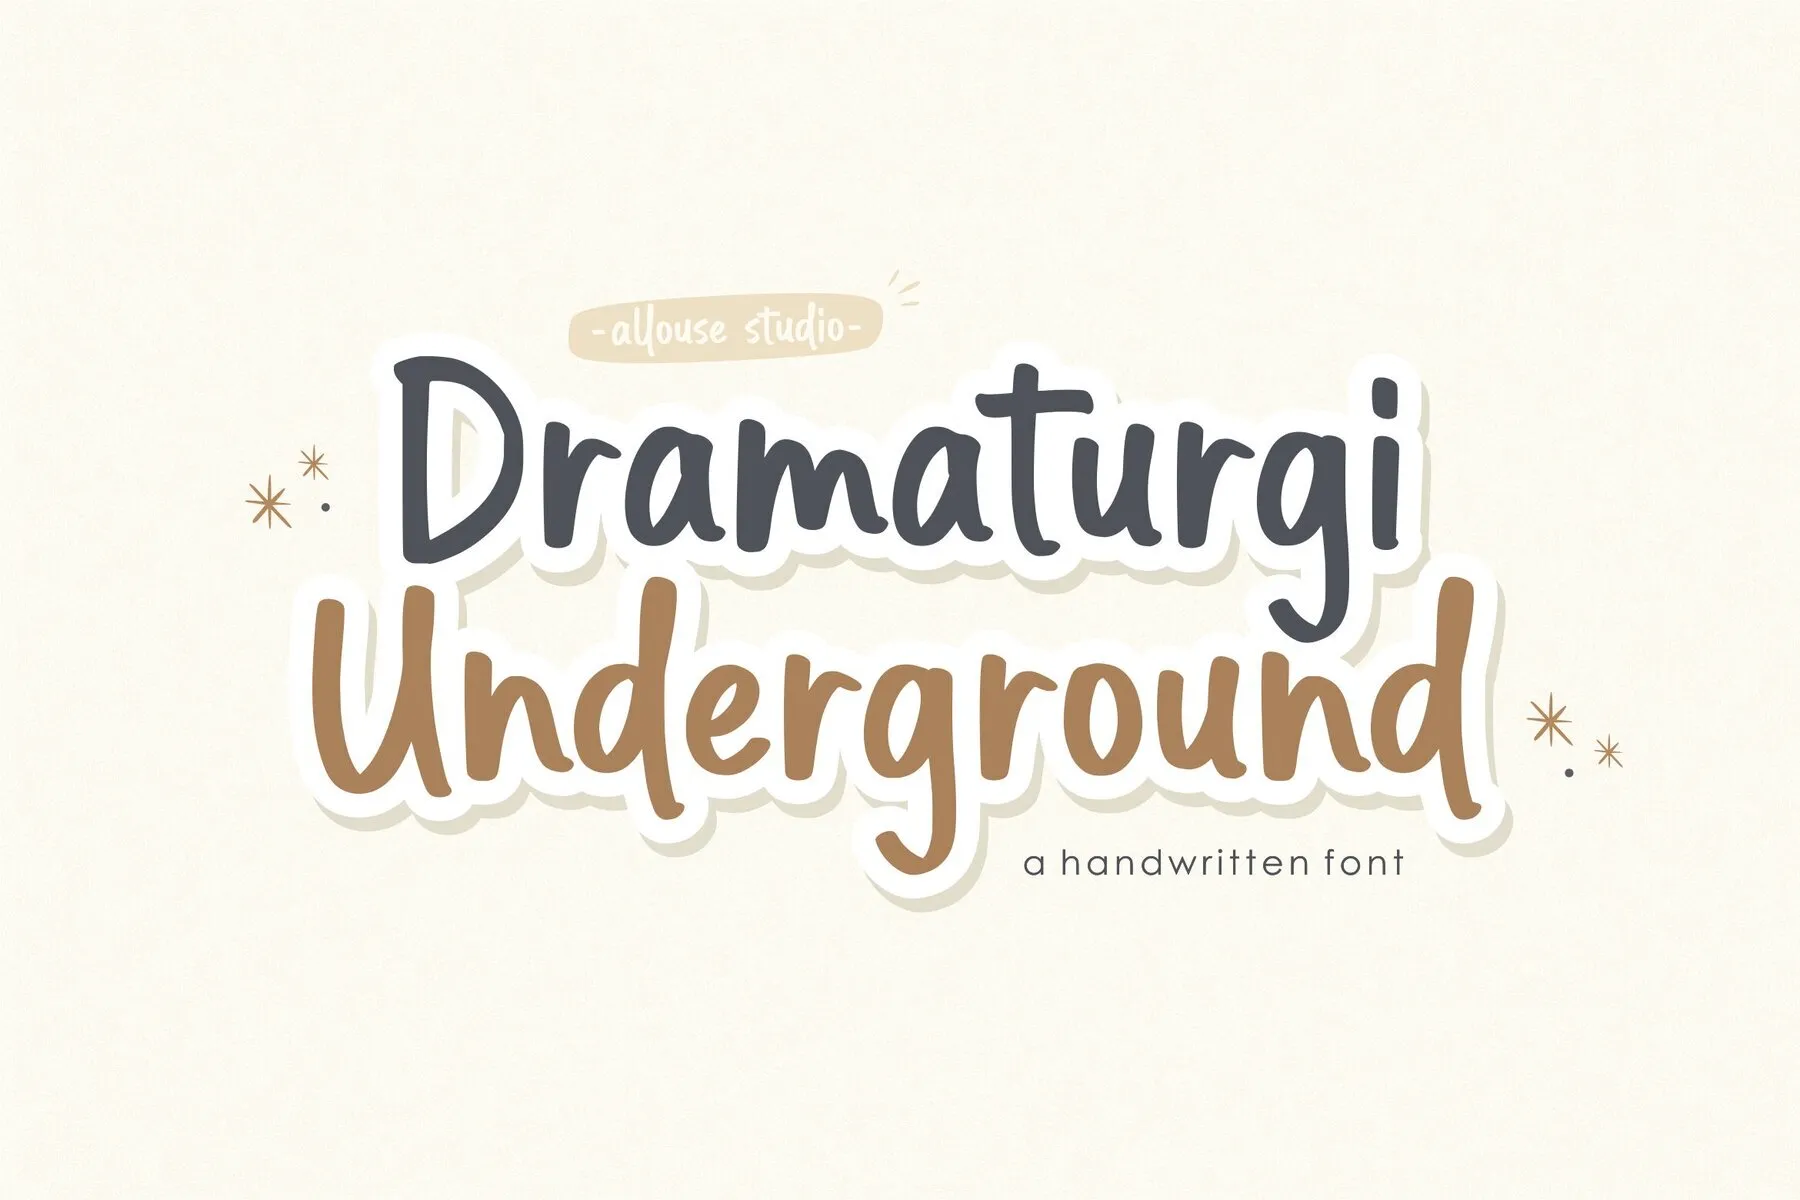 Dramaturgi Underground